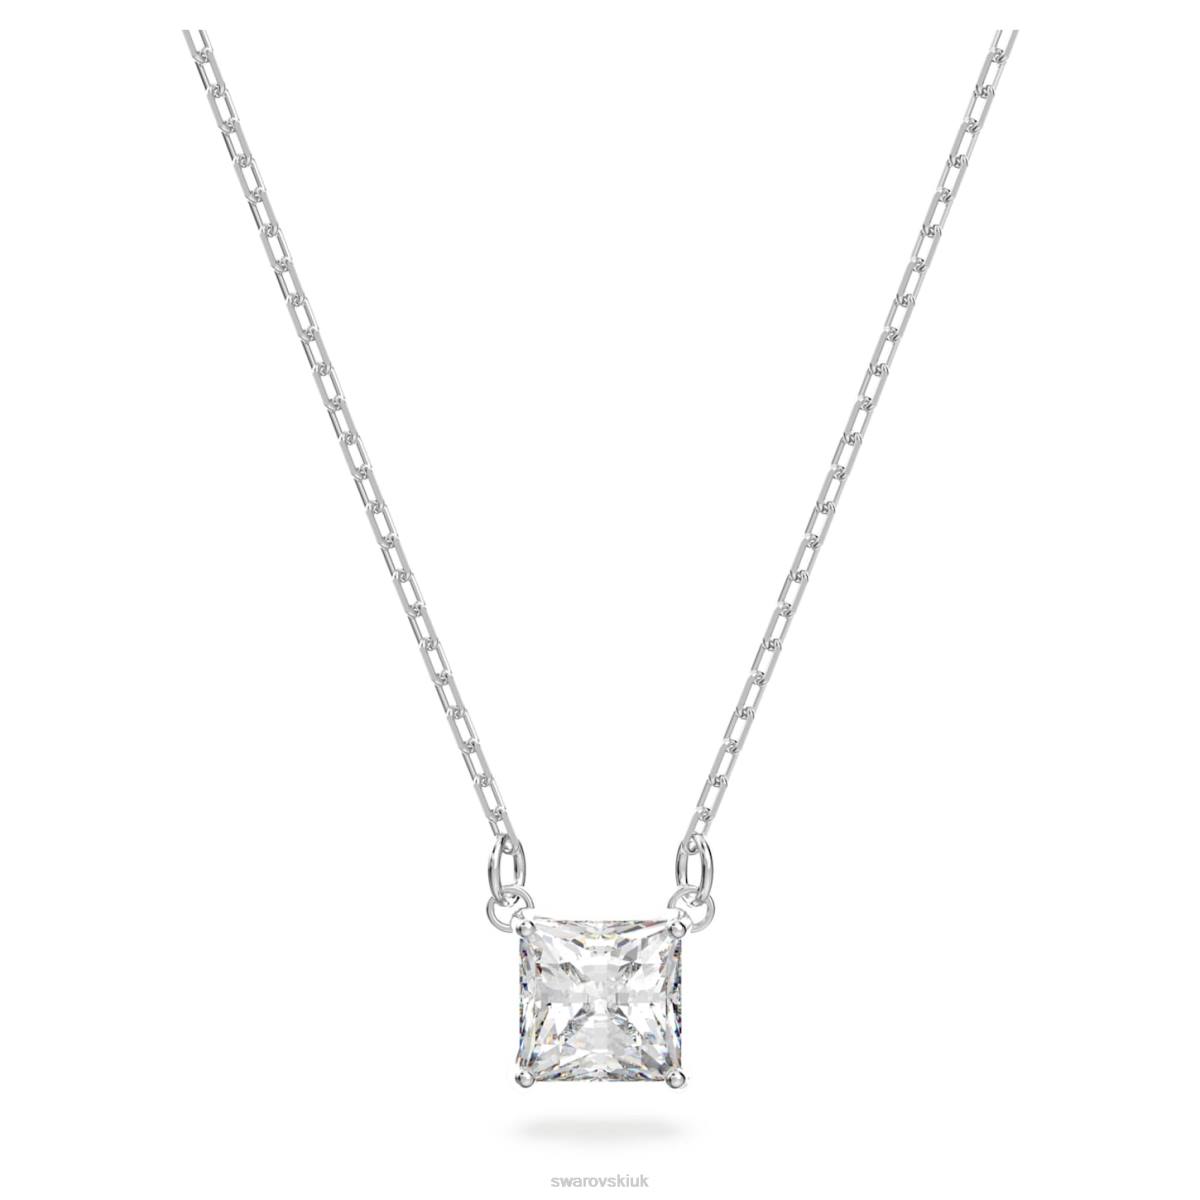 Jewelry Swarovski Attract necklace Square cut, White, Rhodium plated 48JX15